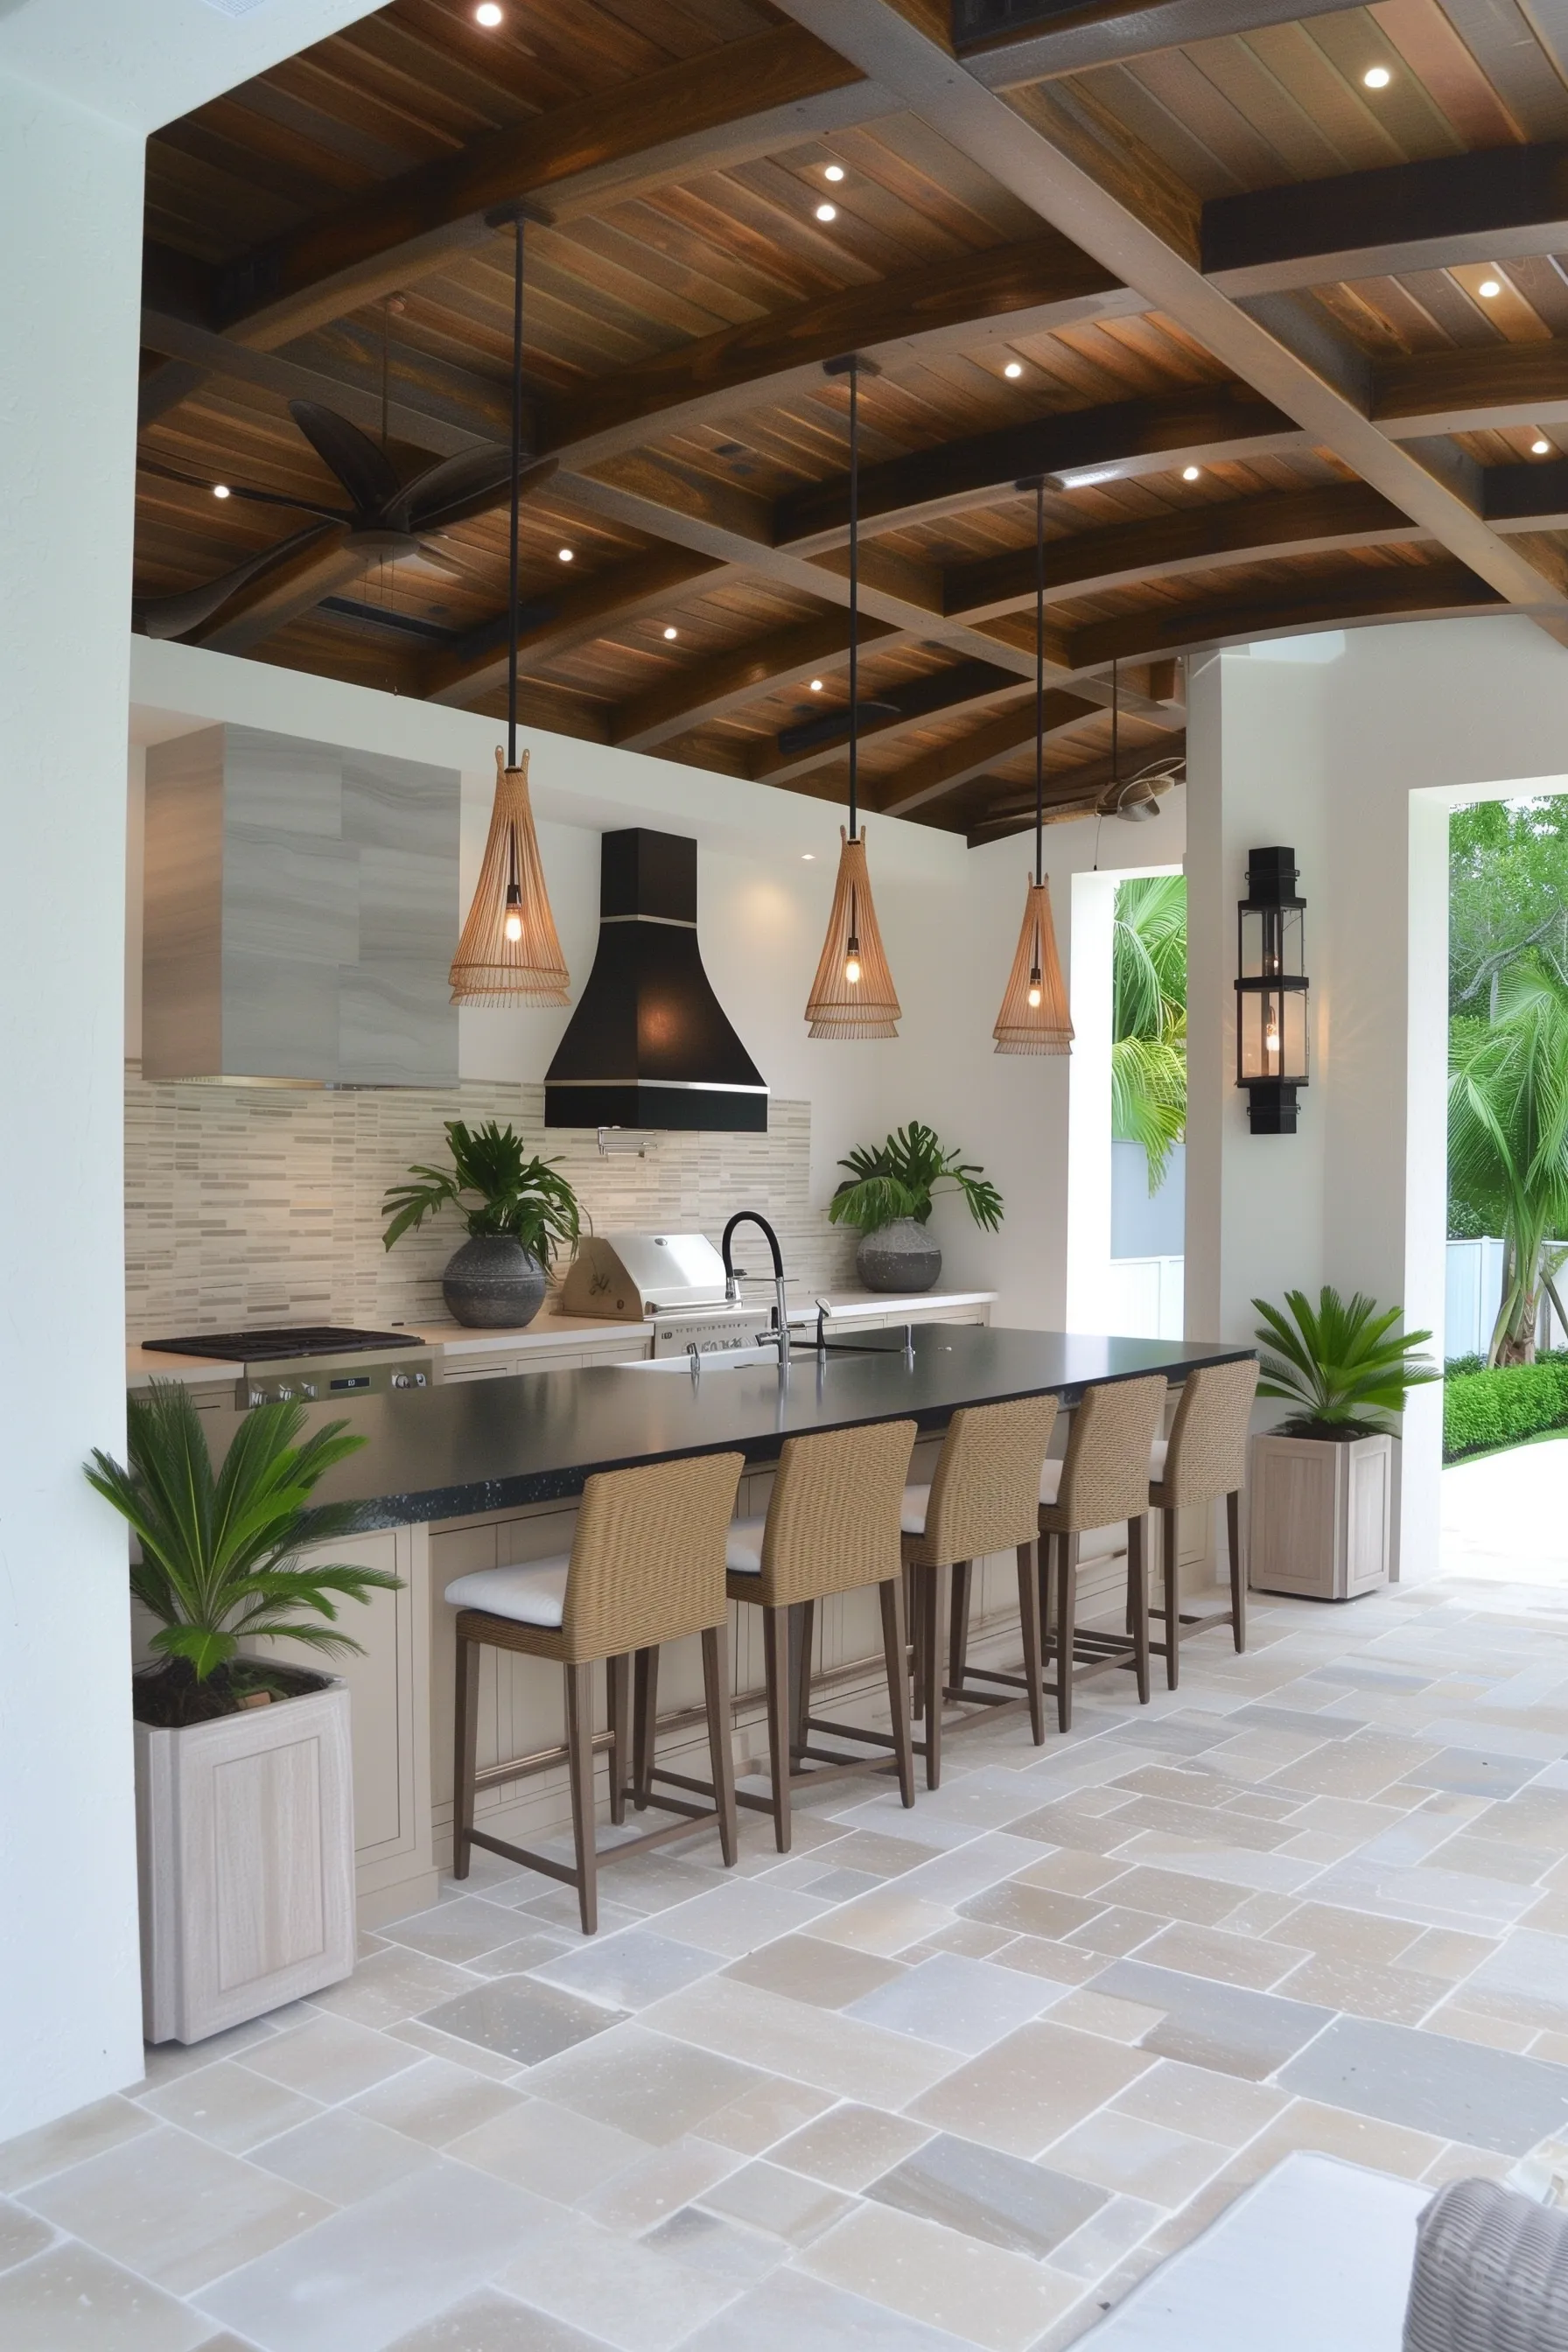 Outdoor kitchen ideas in Florida